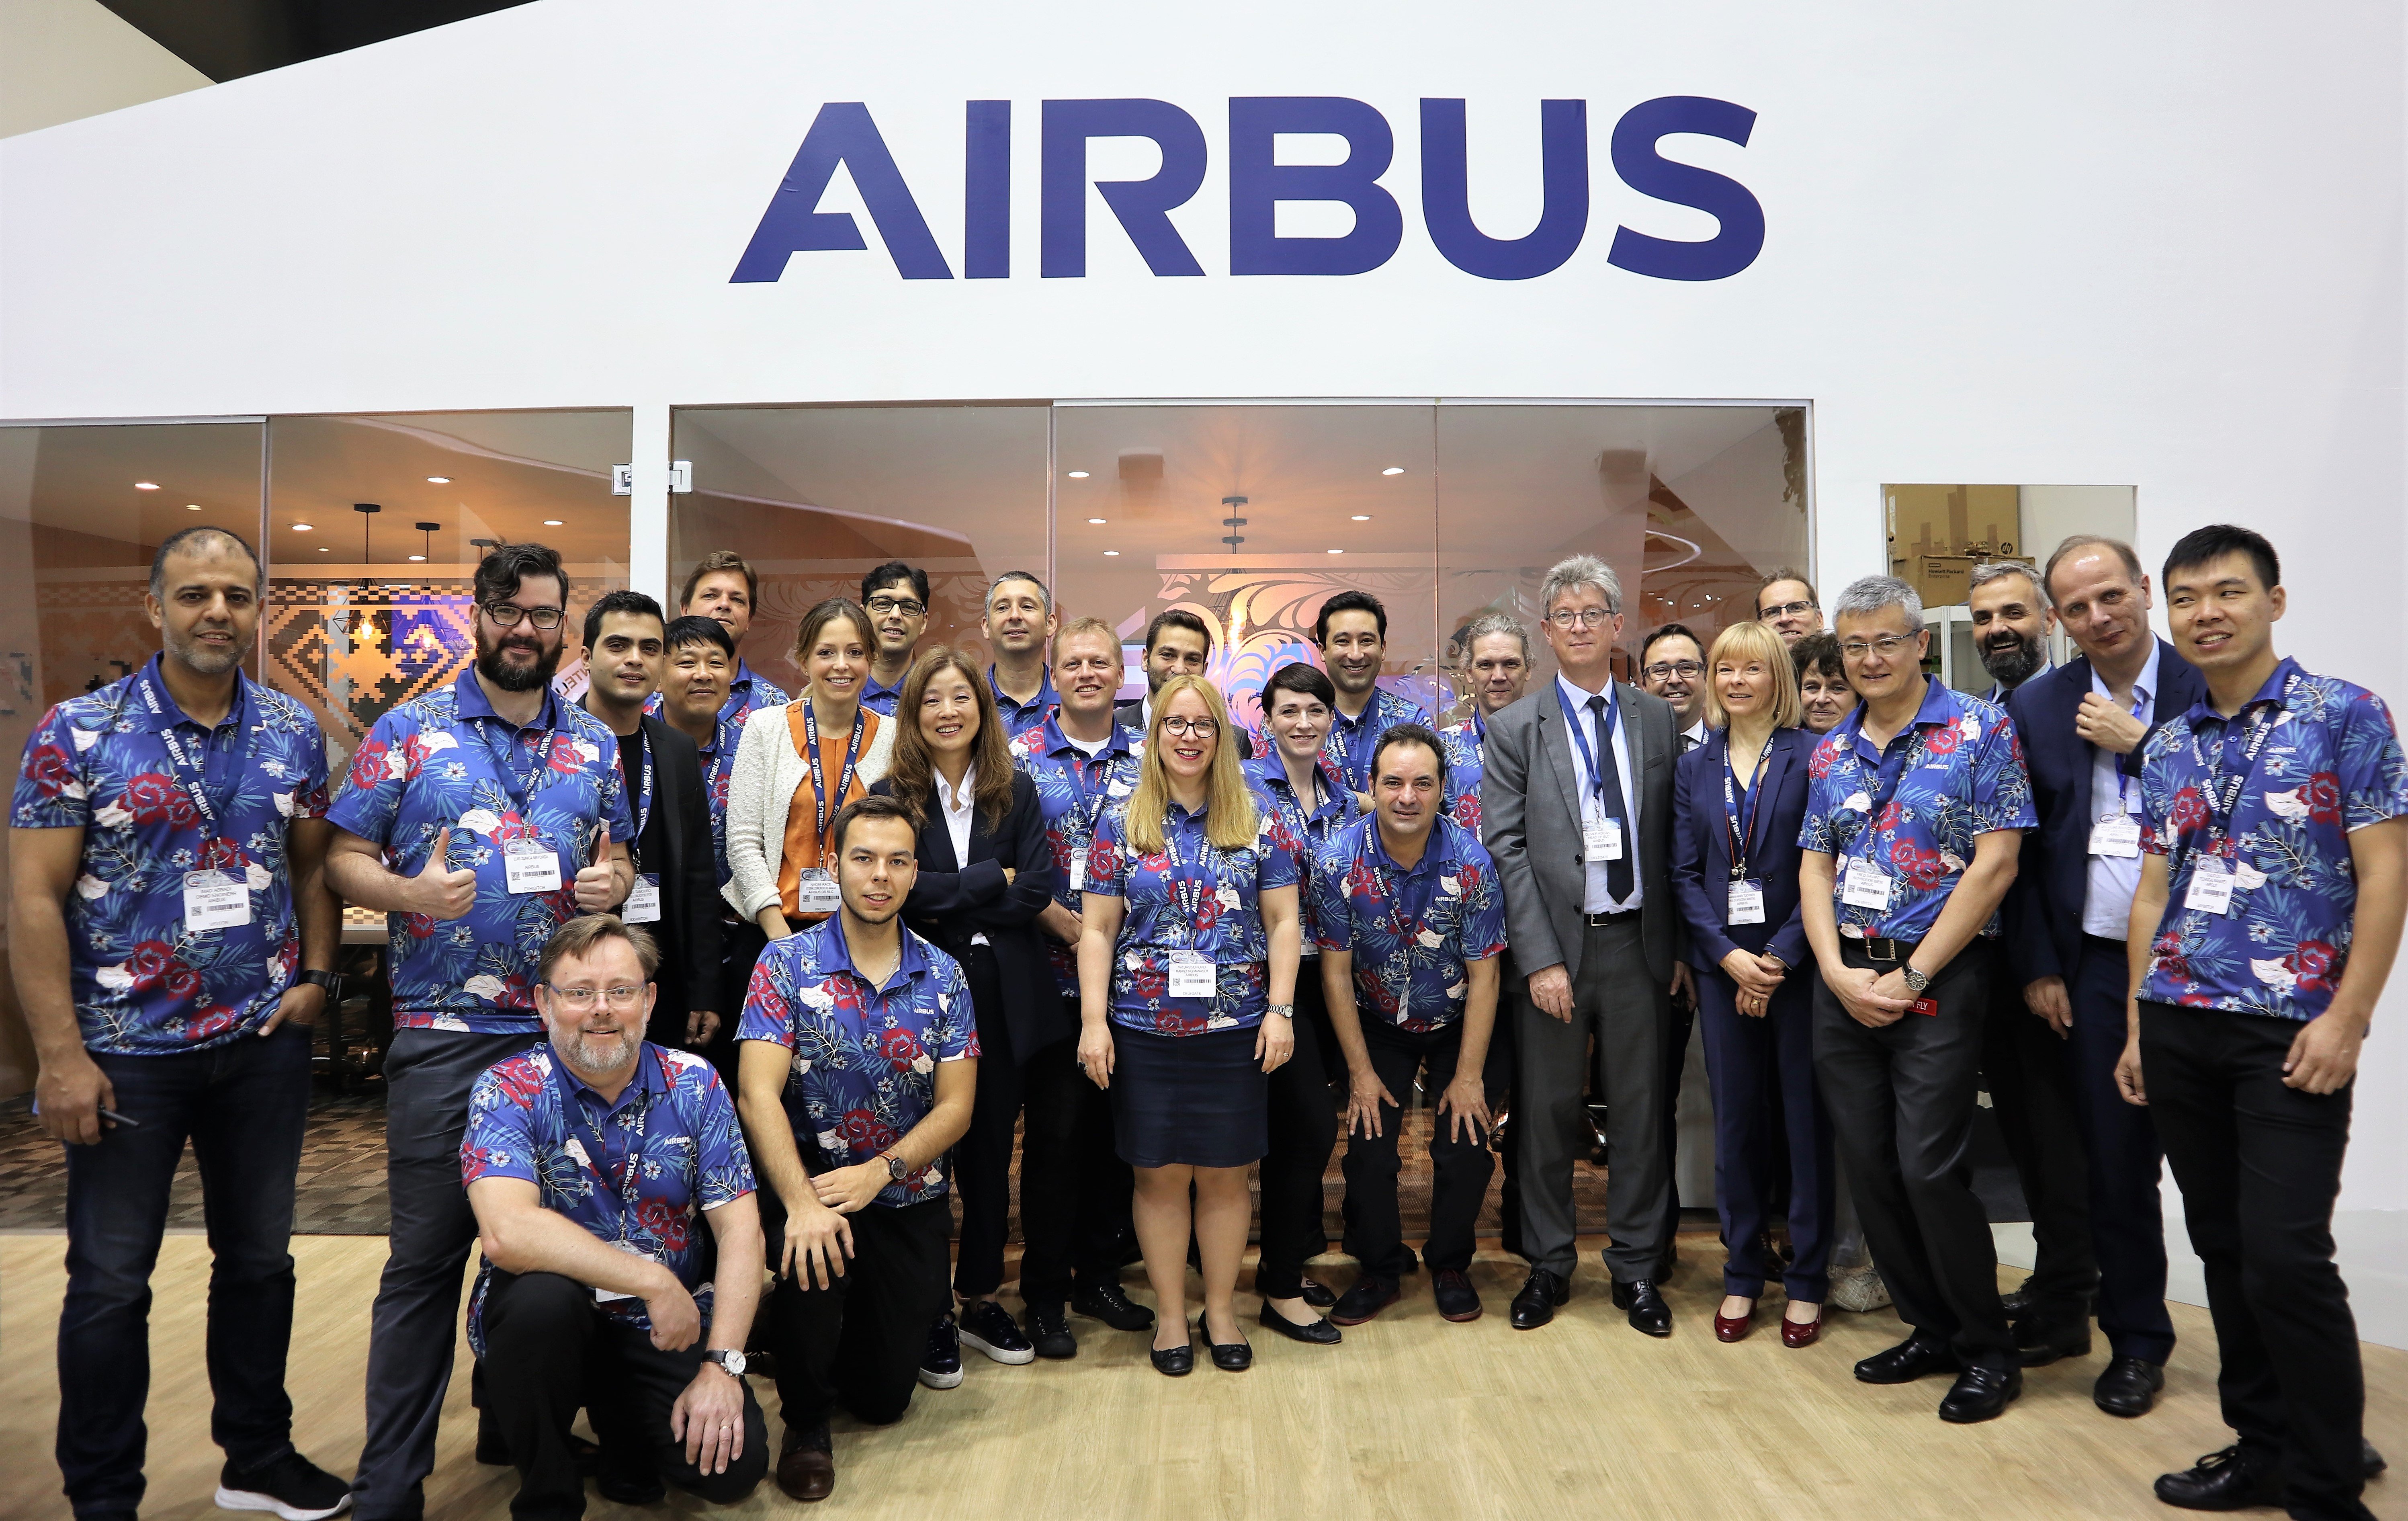 CCW2019 Airbus stand team photo IMG_0863 (2)